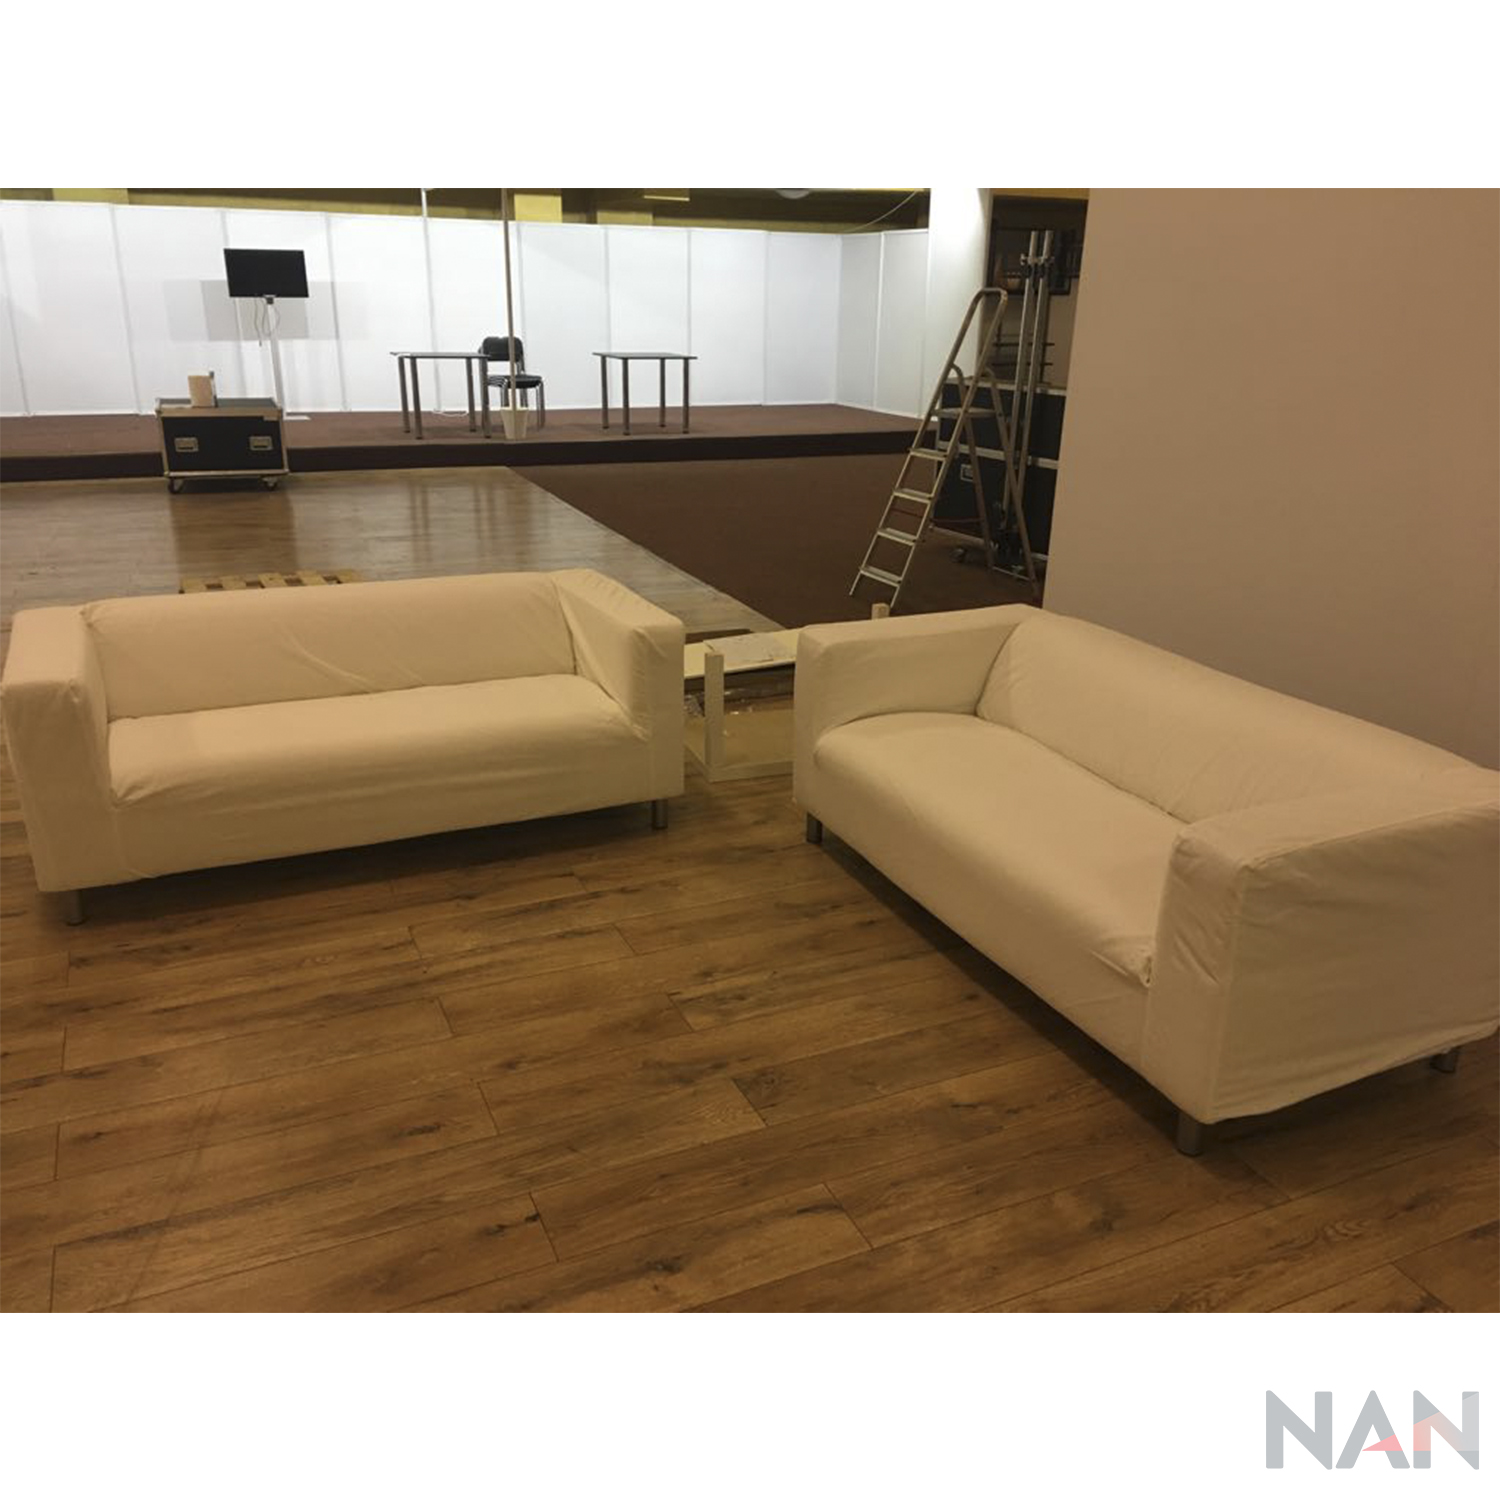 Traditional Penetrate Sharpen Inchirieri canapele cu 2 locuri pentru evenimente corporate - NAN Events